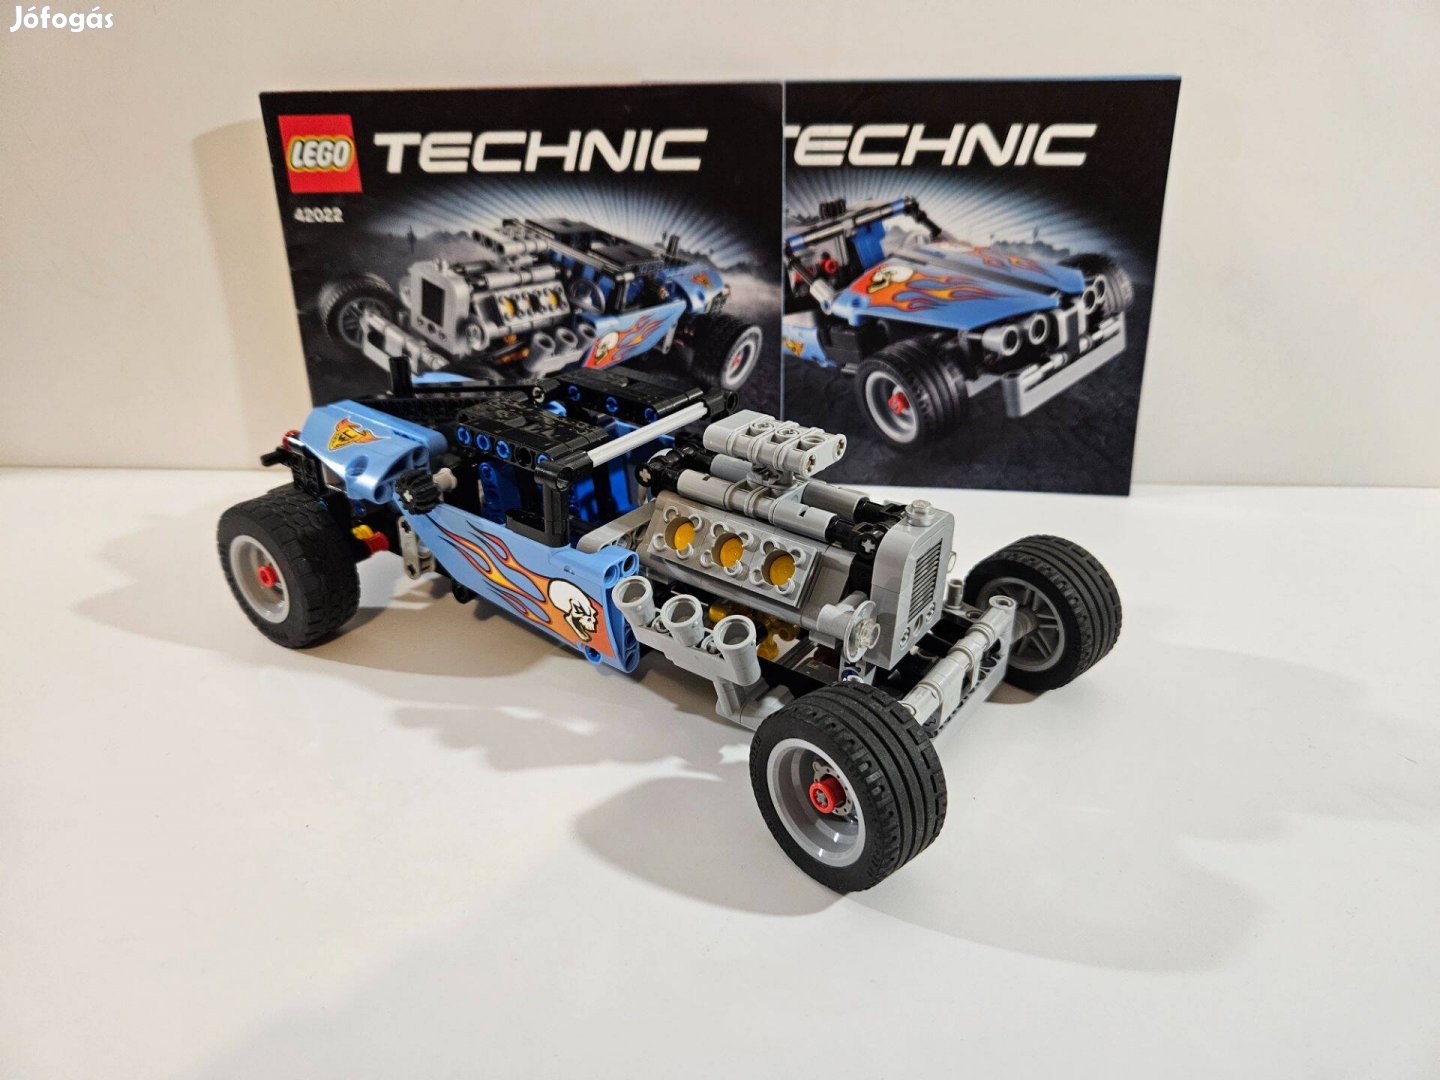 LEGO Technic - 42022 - Hot Rod